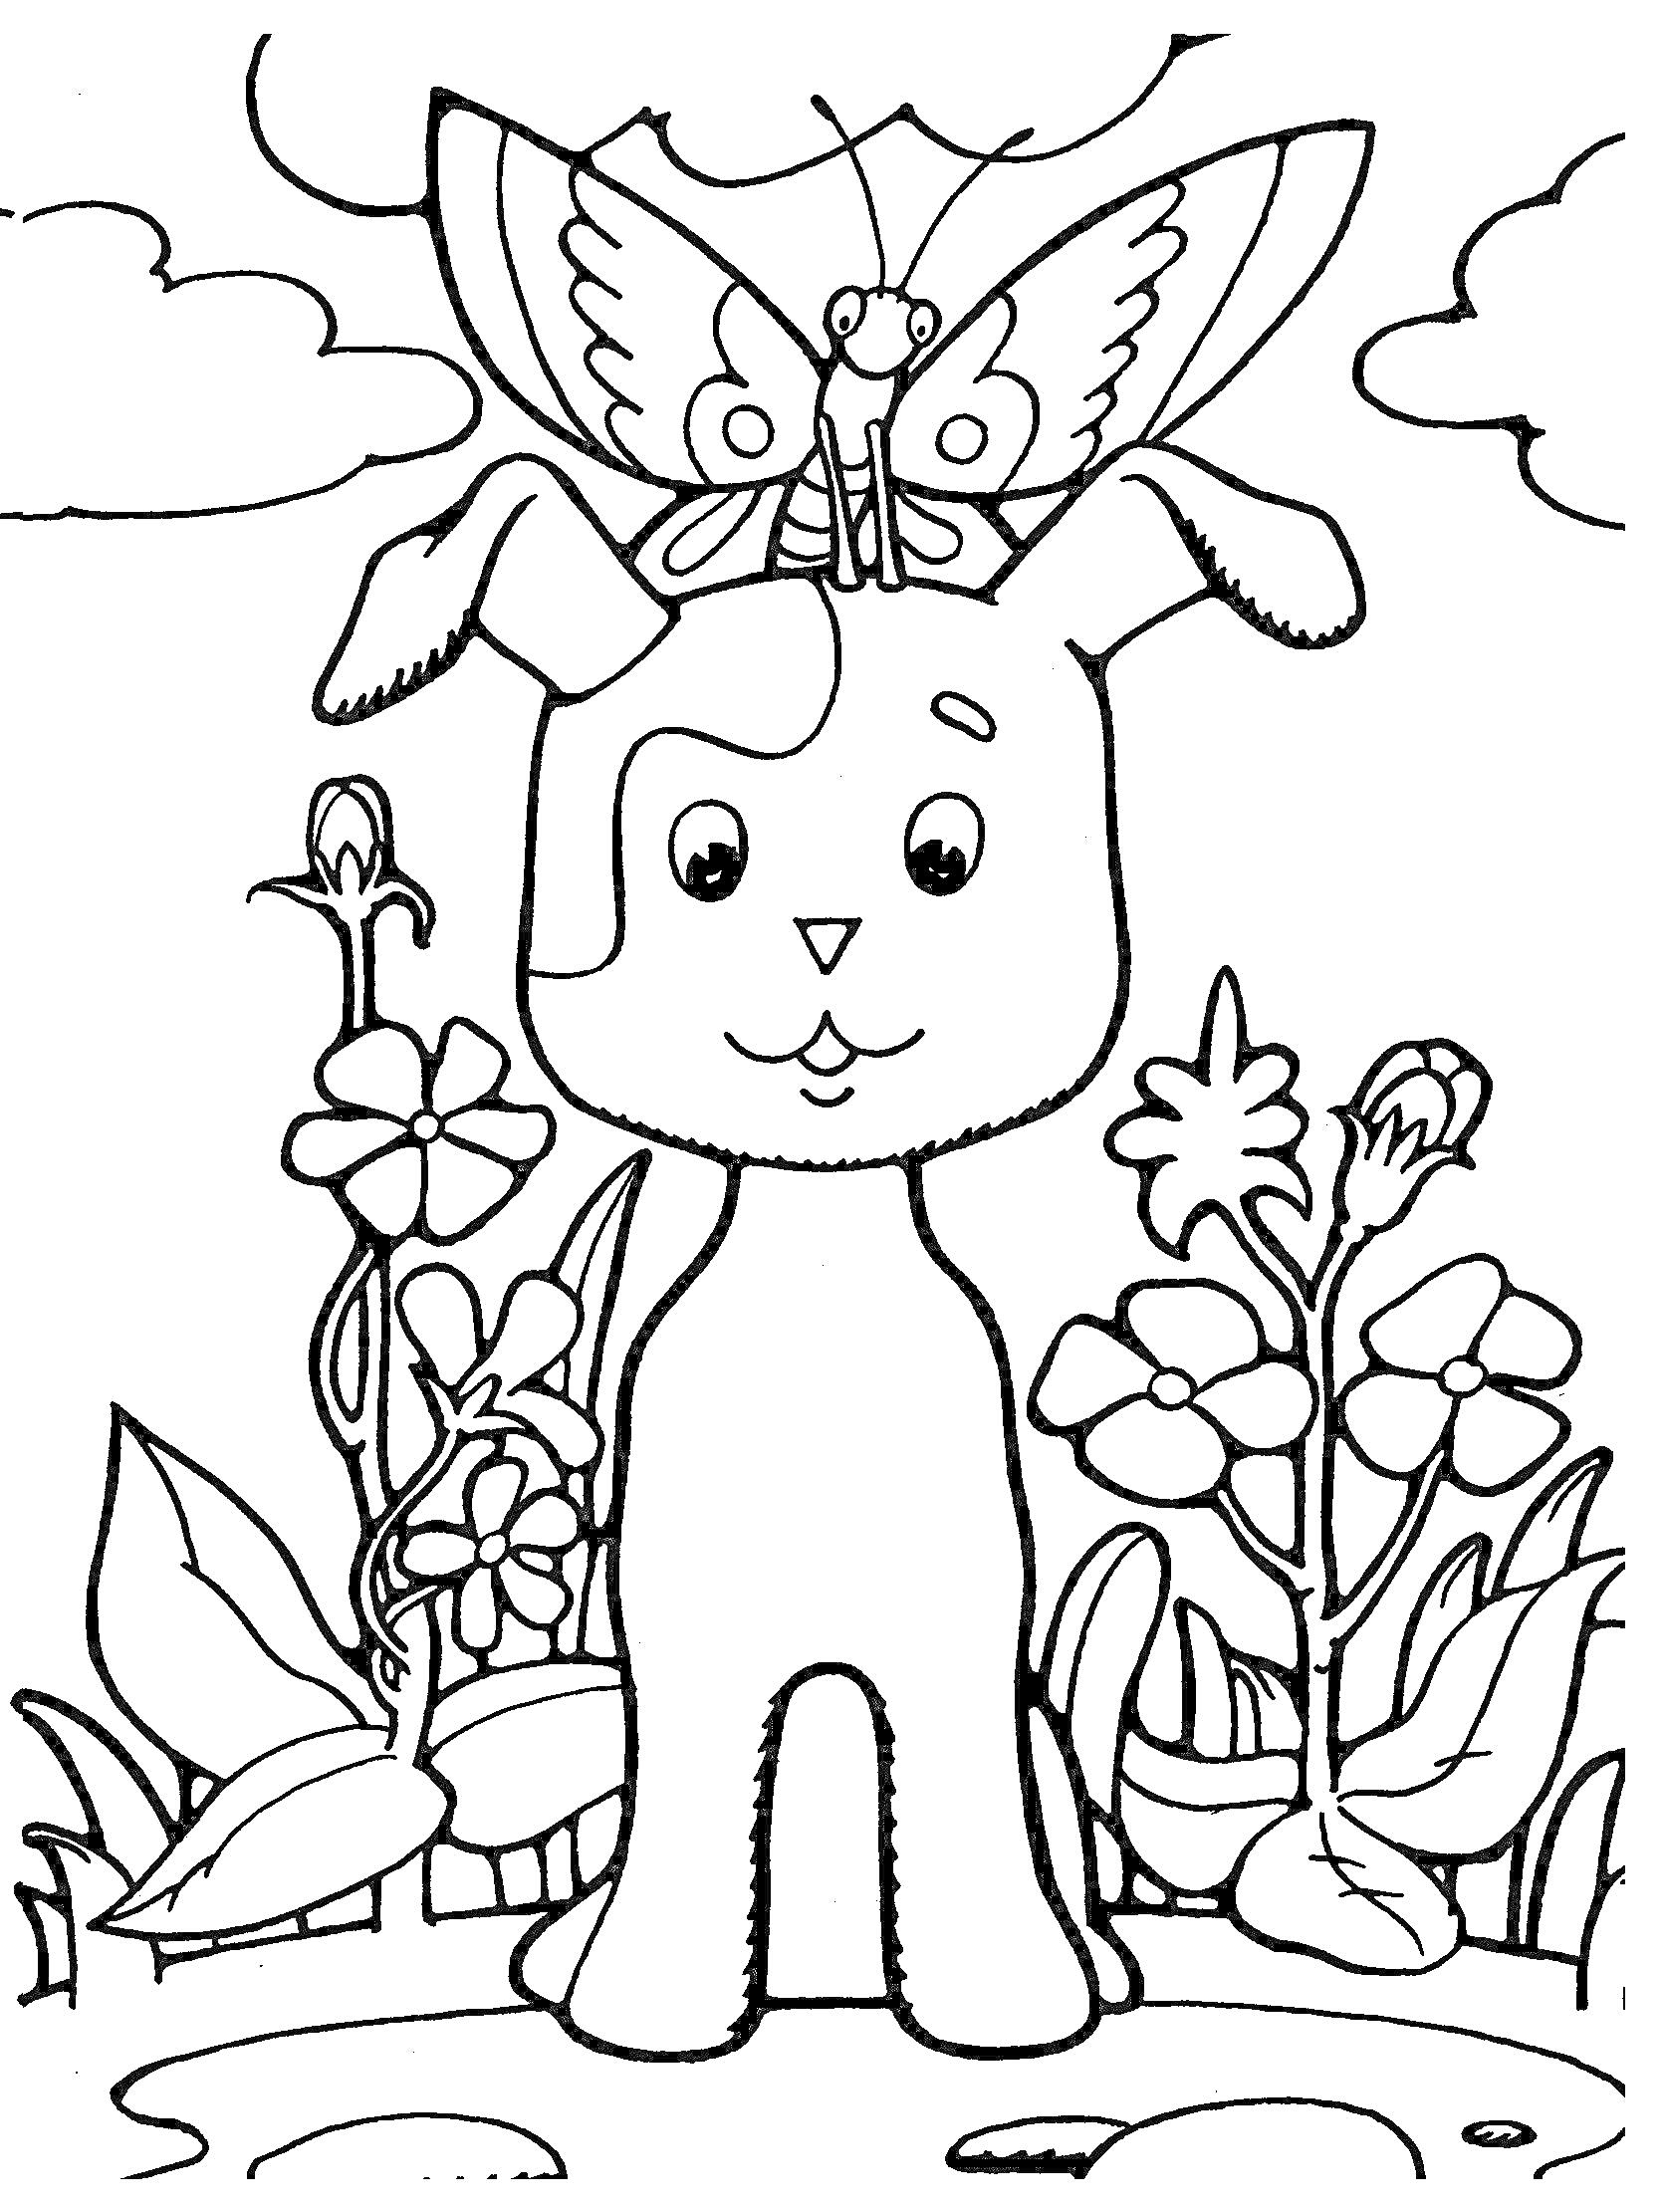 Котенок по имени Гав с бабочкой на голове, среди цветов и травы, на фоне облаков